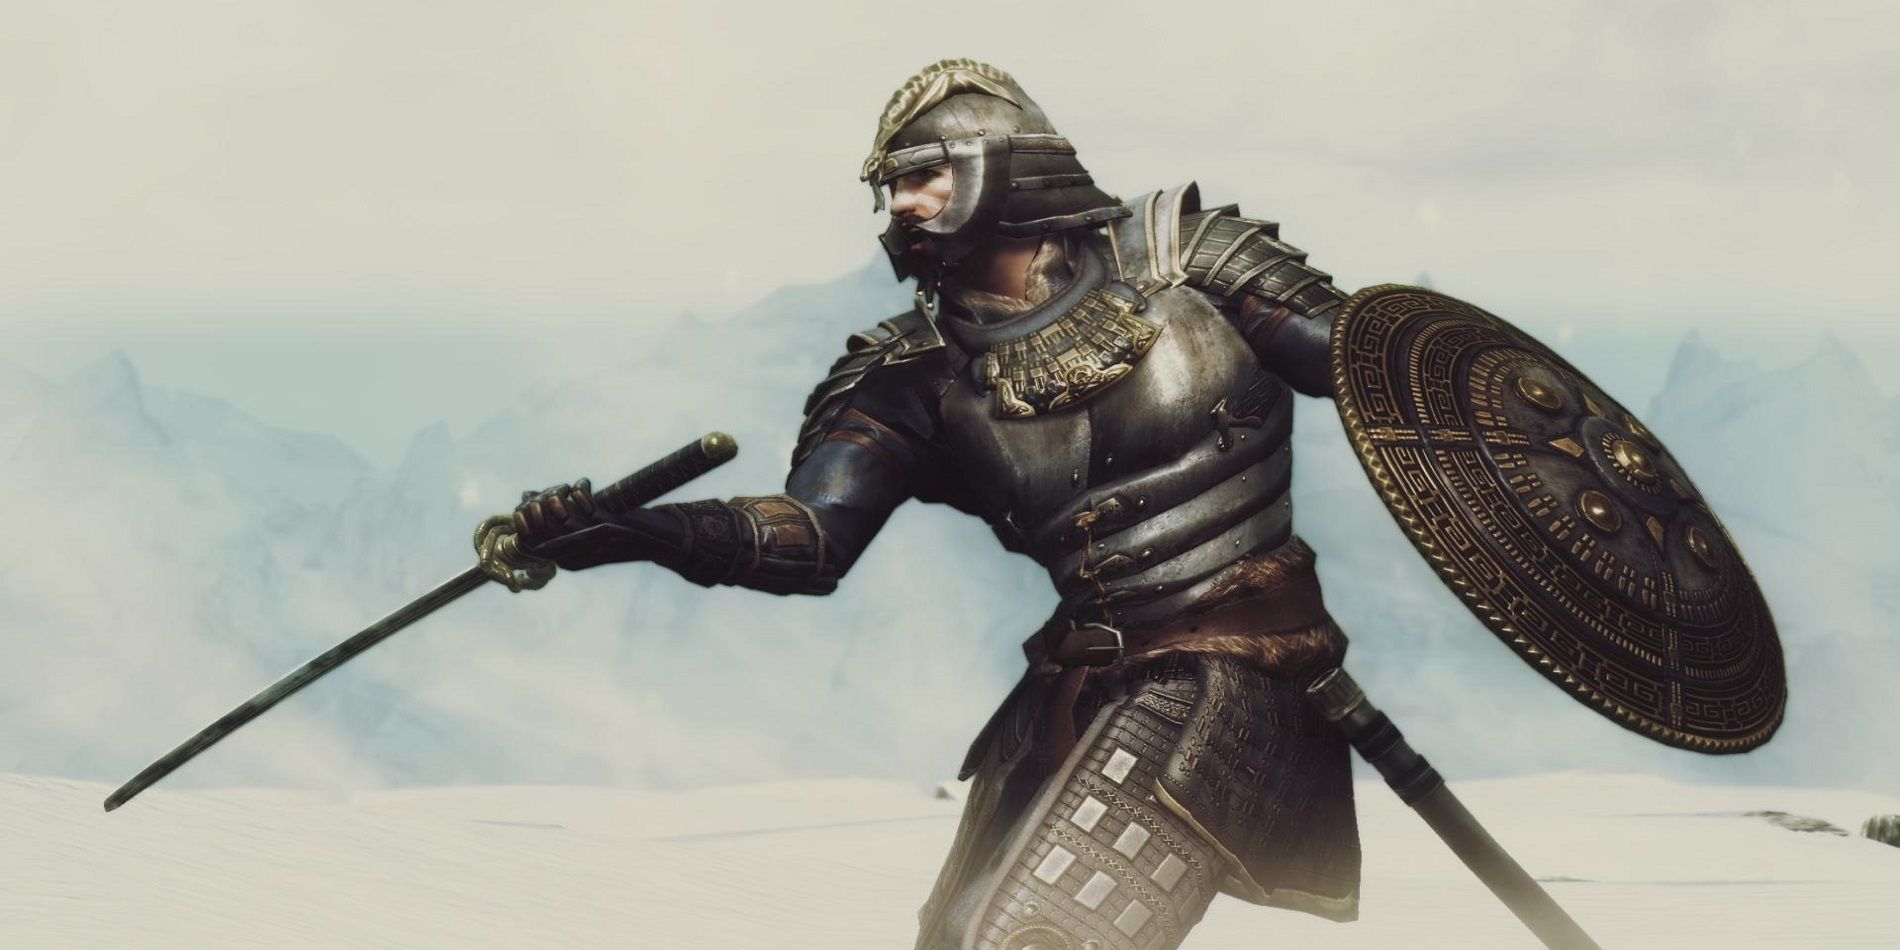 Skyrim Blade Warrior Mid-Swing Katana and Shield Combo